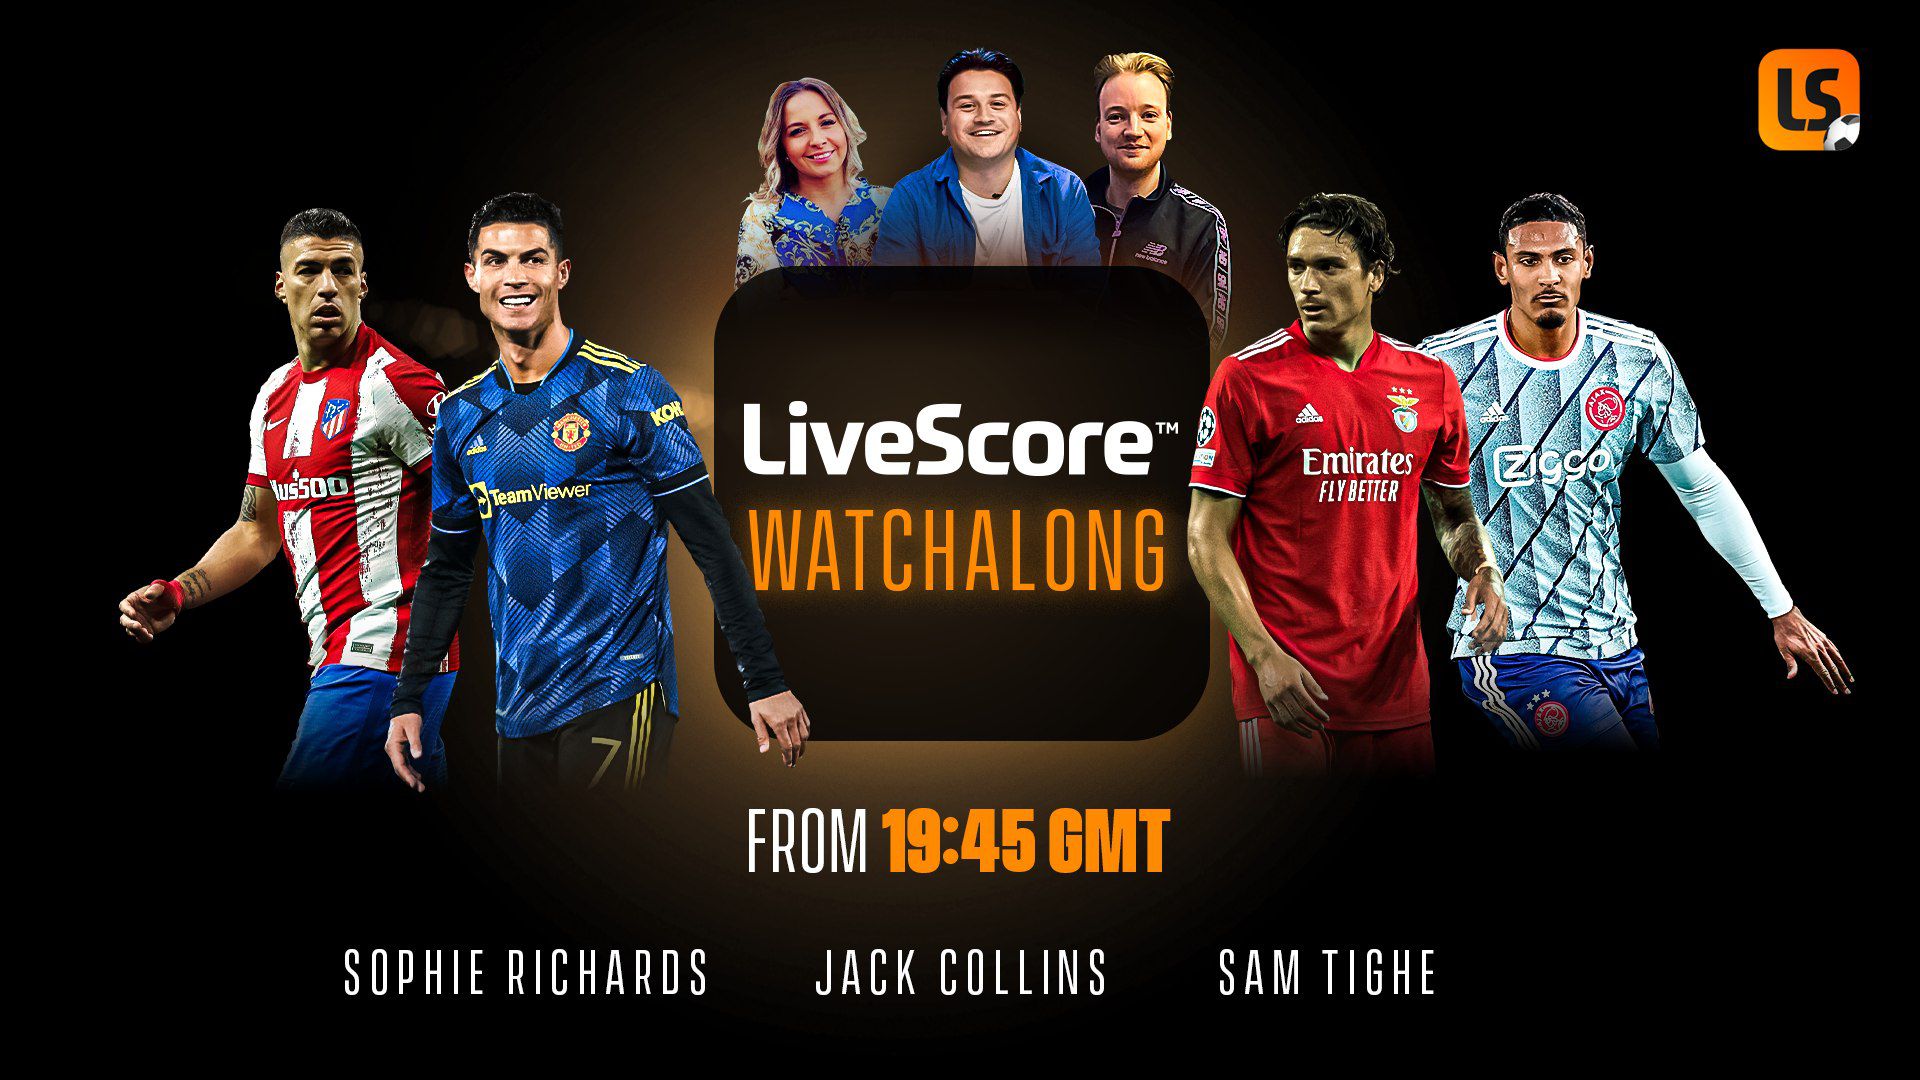 Follow the Champions League LIVE with LiveScore Watchalong LiveScore